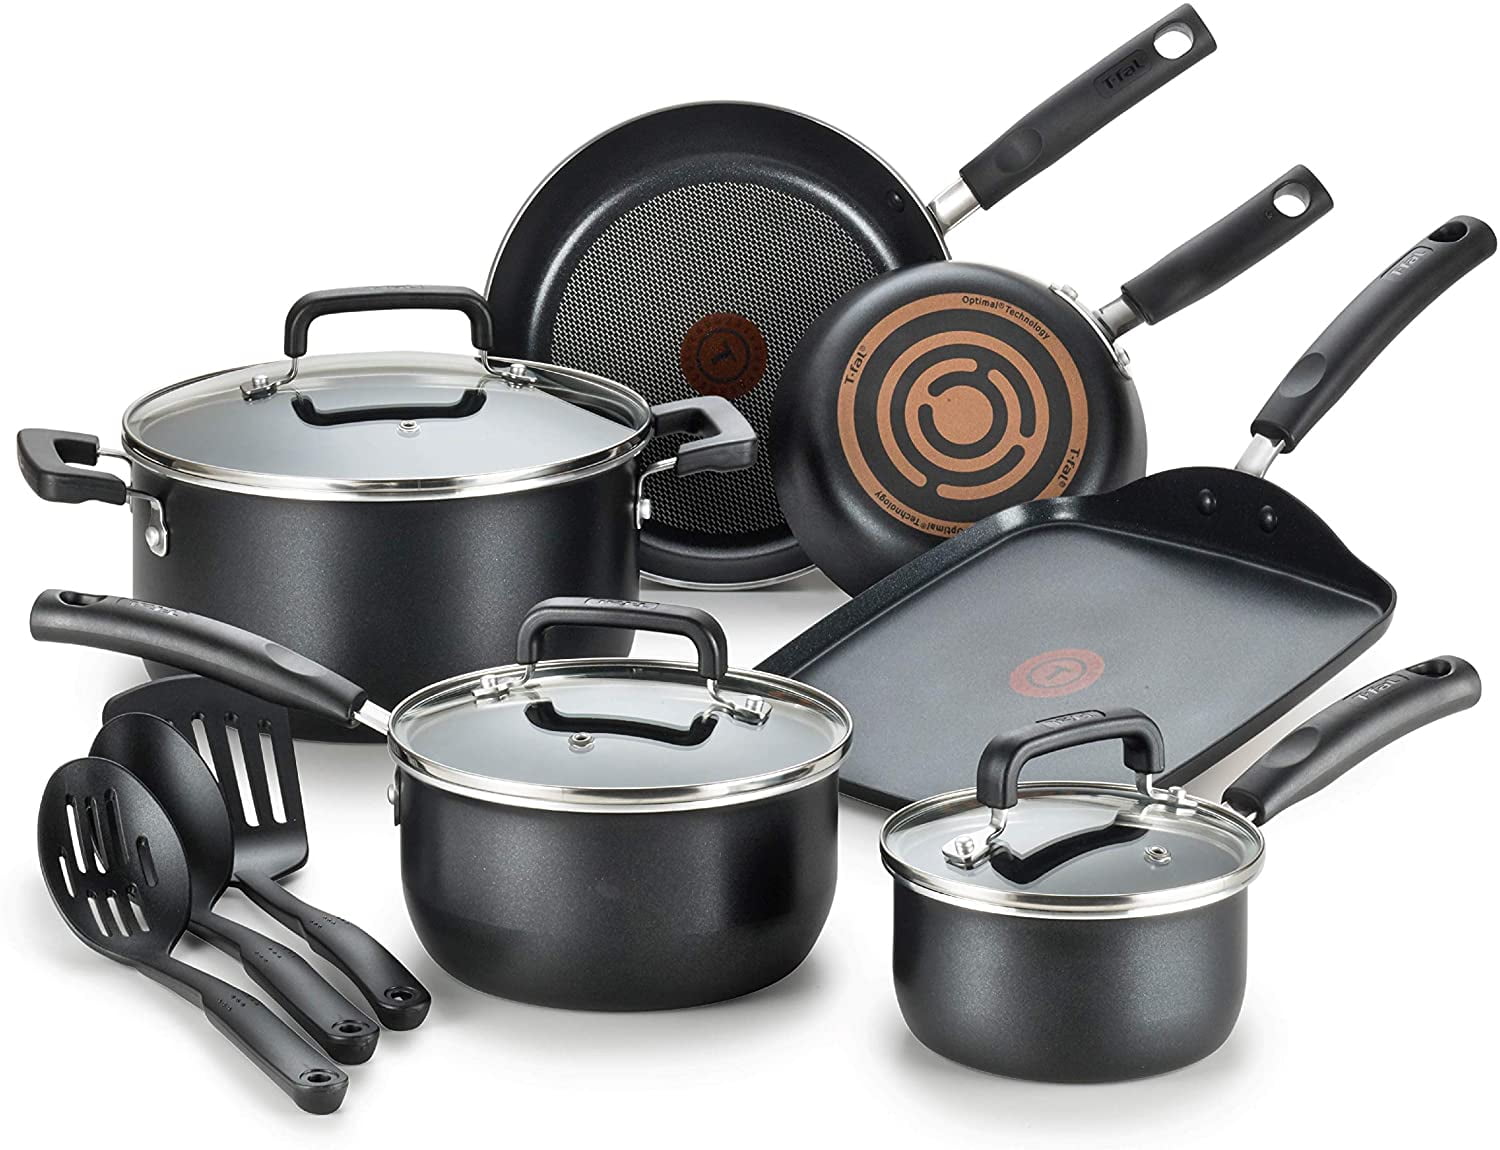 Details about   12 Piece Cookware Set Nonstick Pots Pans Kitchen Cooking Complete T-fal New 